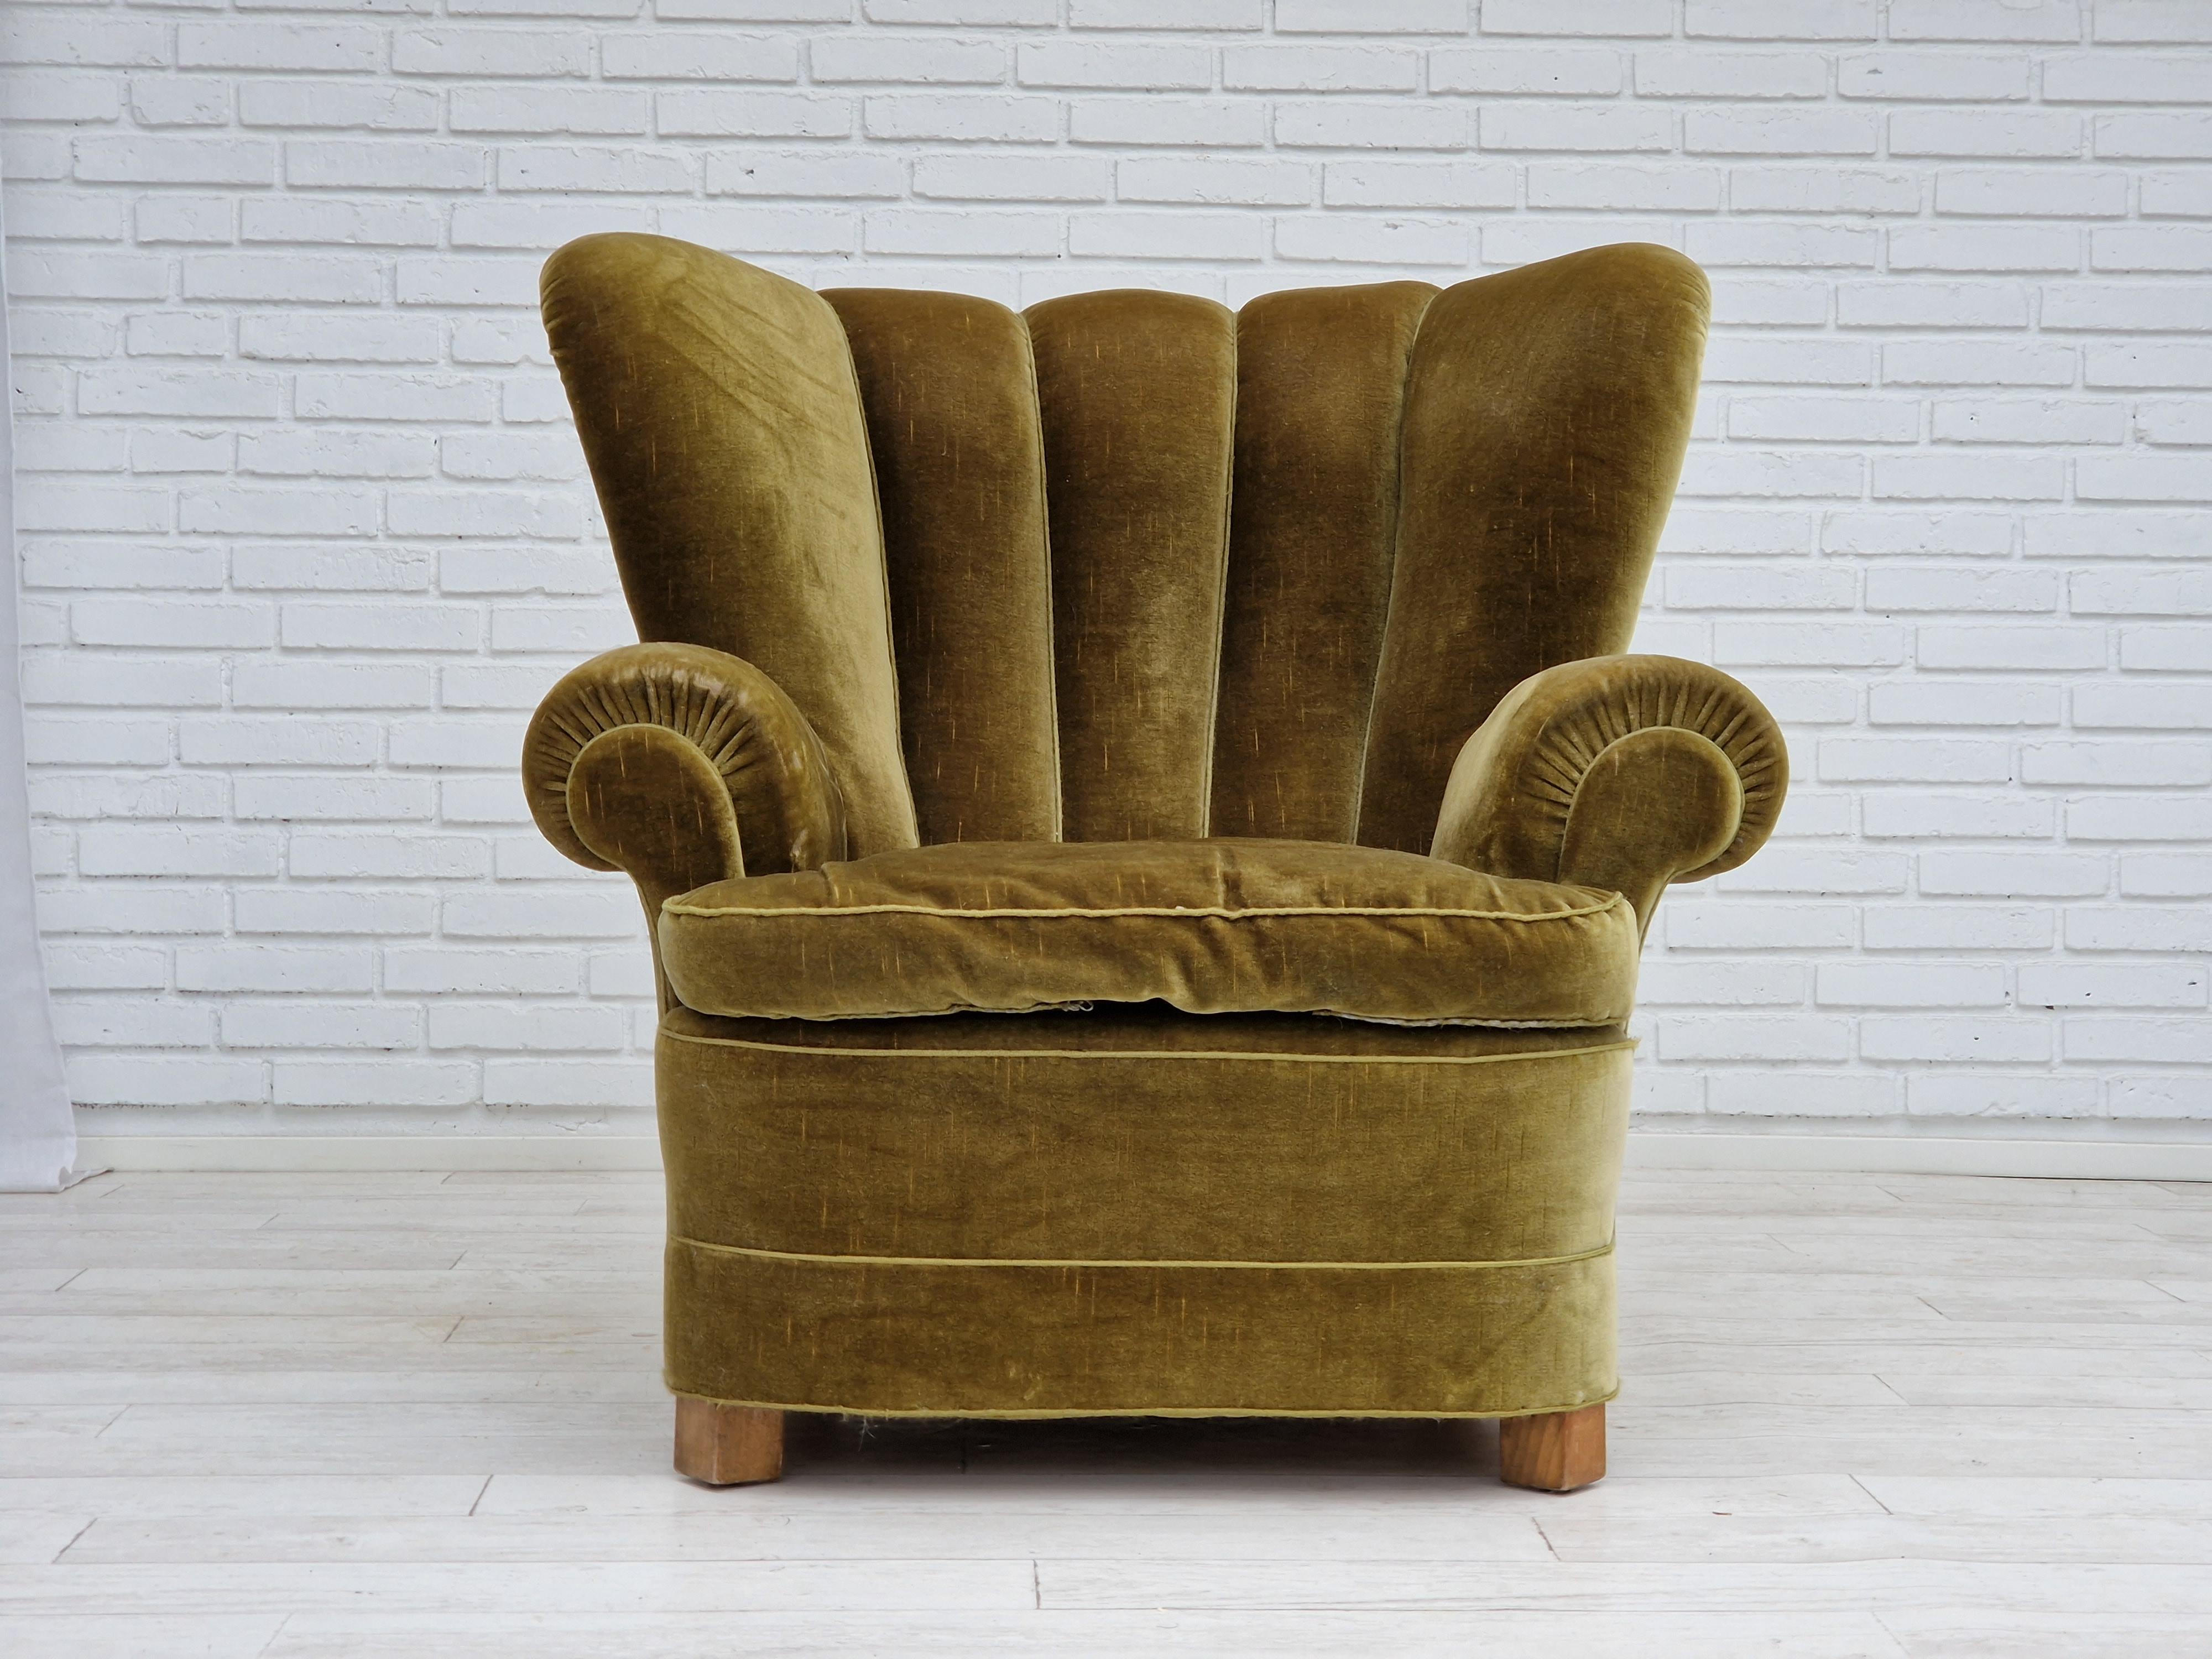 Scandinavian Modern 1960s, Vintage Danish Relax Chair, Original Condition